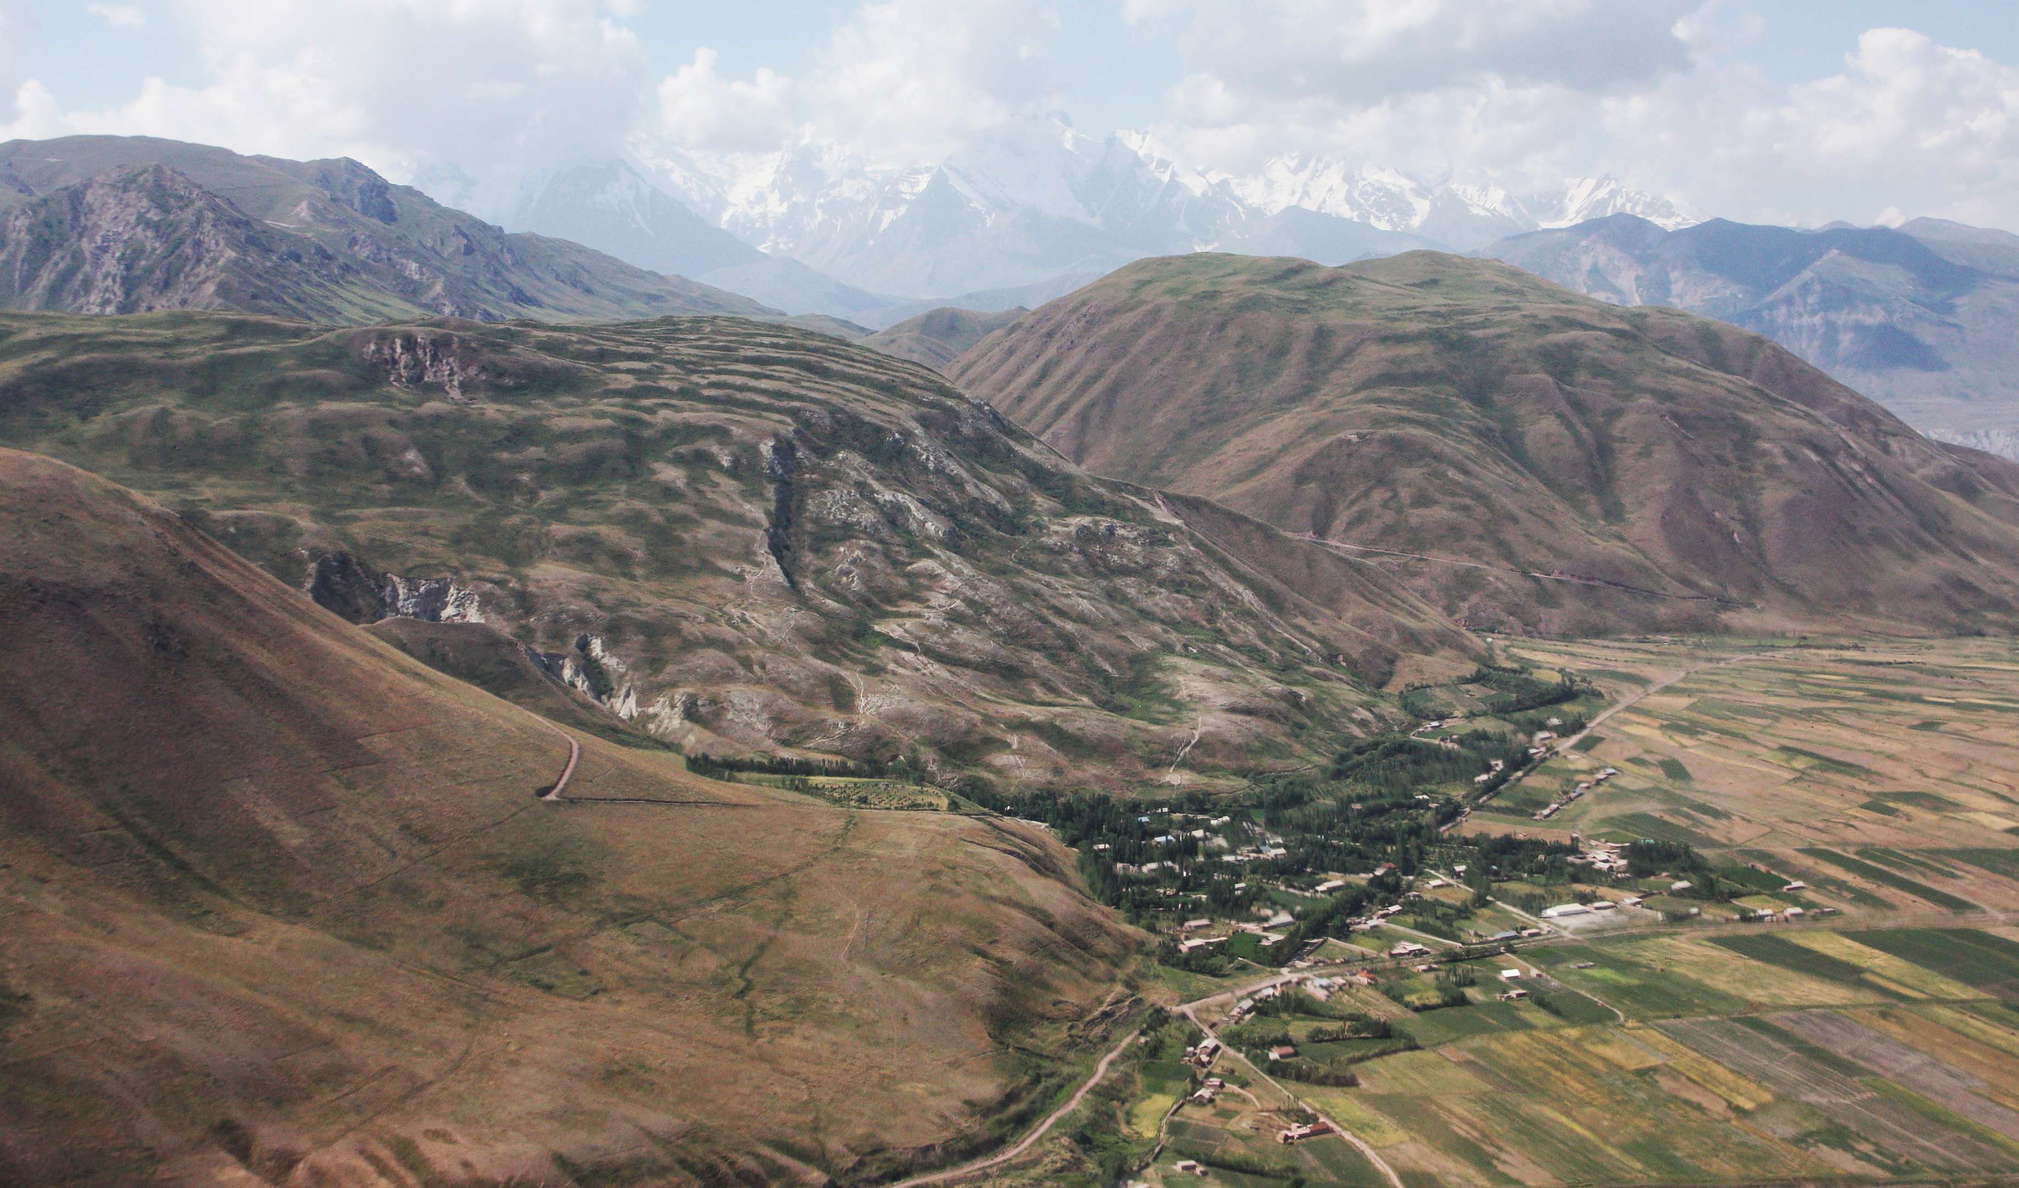 Kyzylsu Valley  |  Gypsum karst and landslide